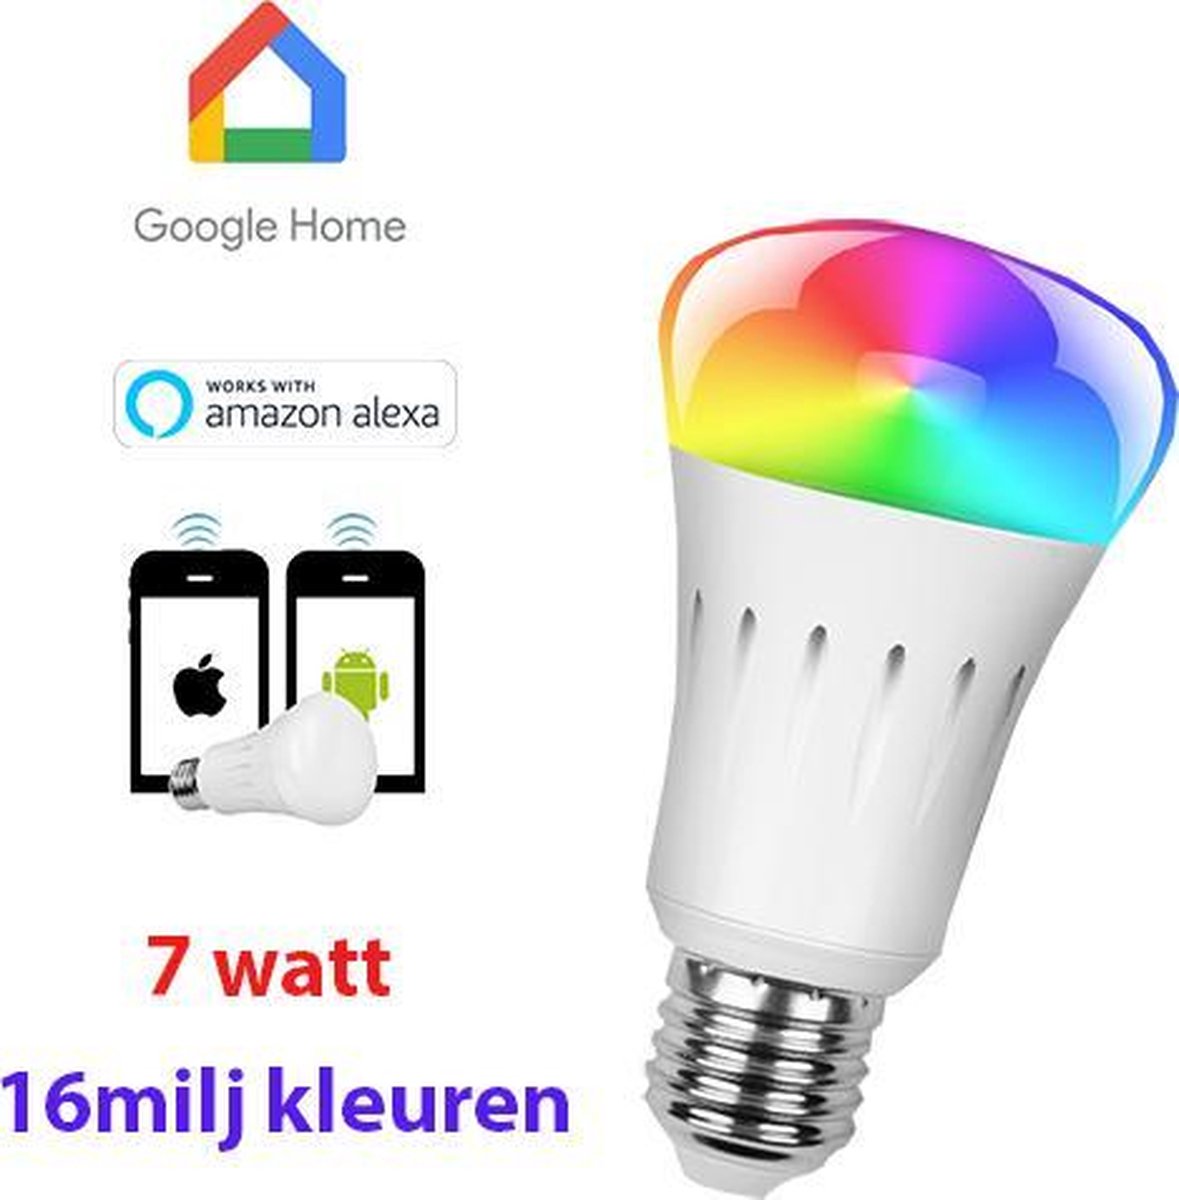 hoek Verhoog jezelf wijsvinger bol.com | Smart Bulb spot Led 7wat lamp E27– GOOGLE HOME ALEXA 17miljoen  kleuren